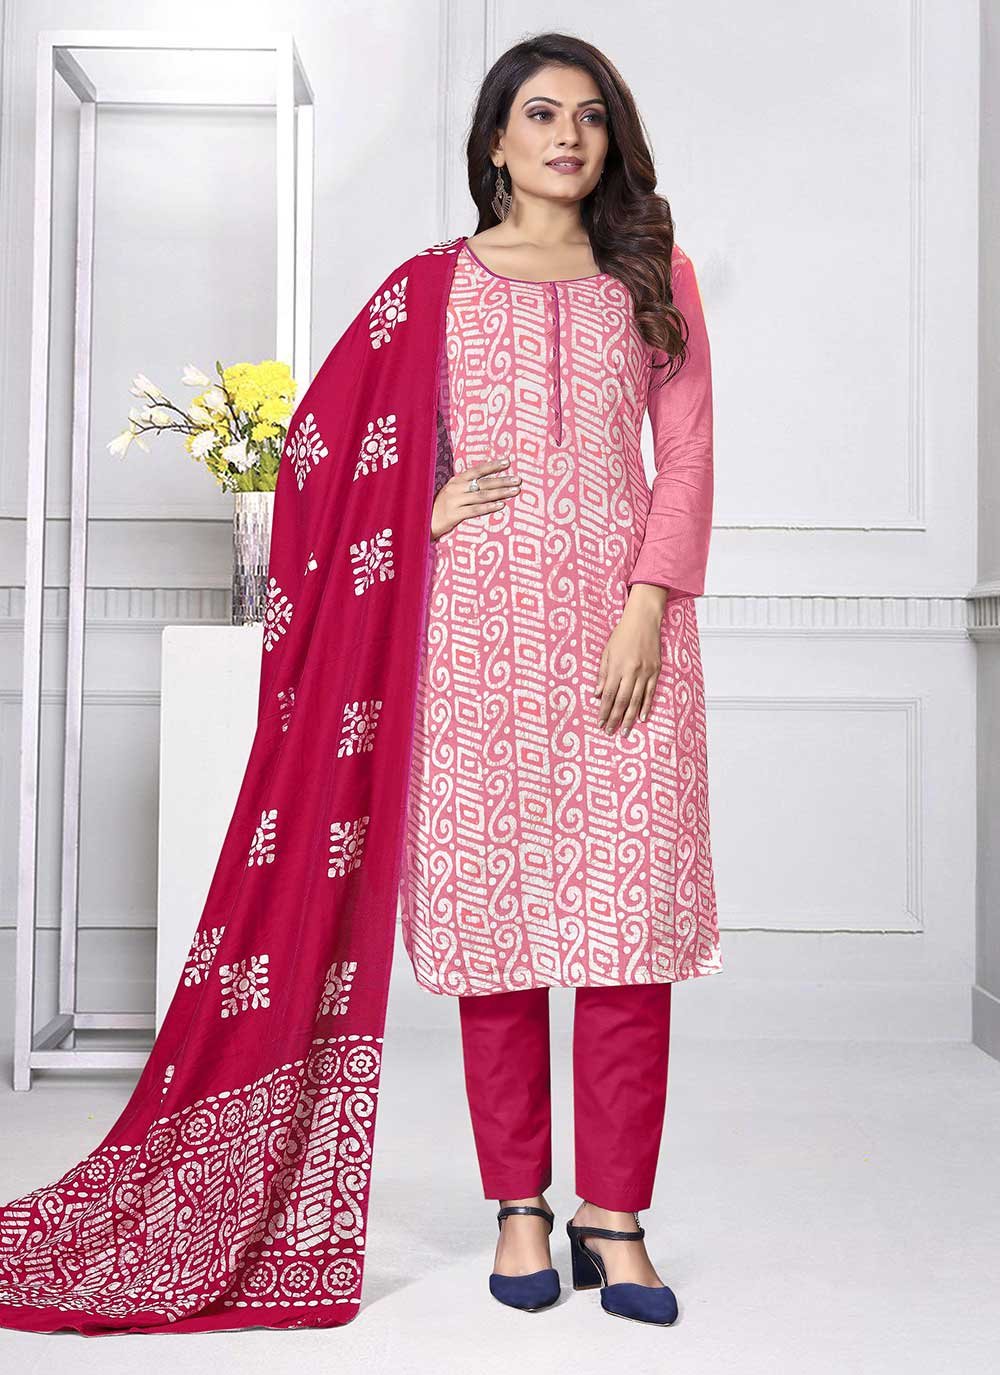 Buy Indian beautiful pink printed cotton pant dress